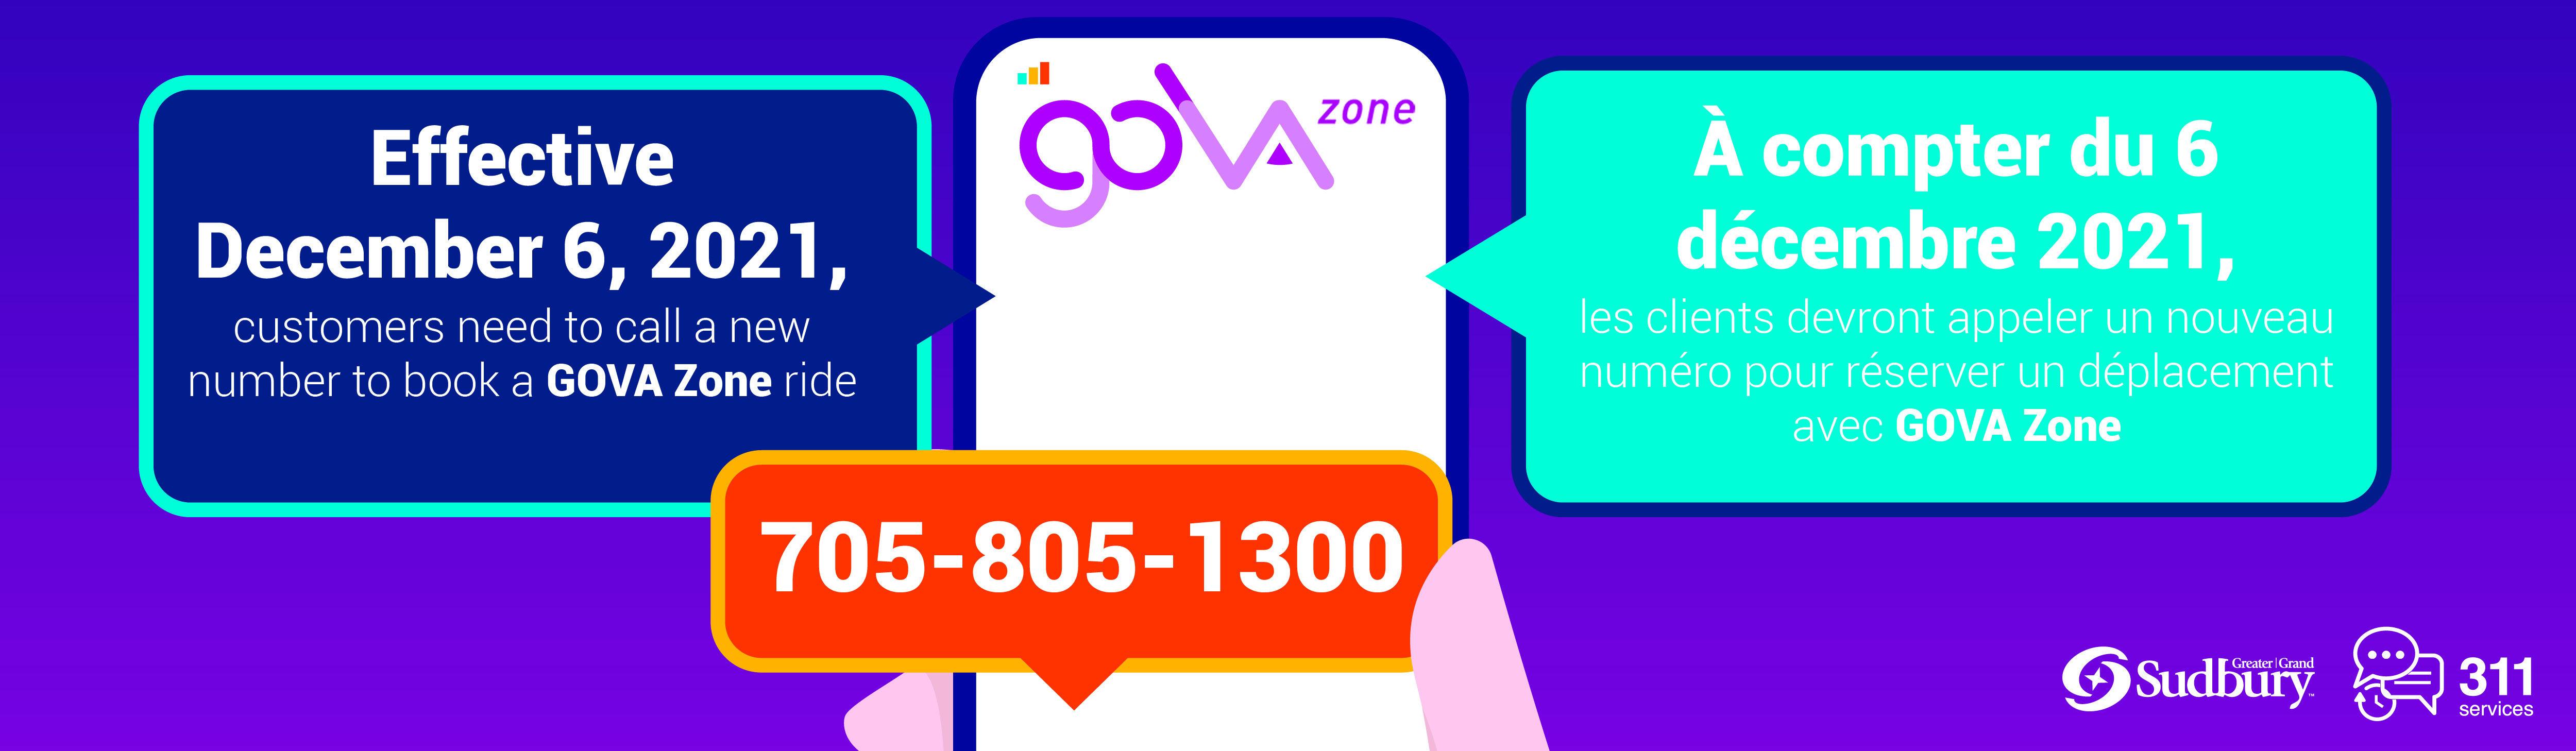 GOVA zone new phone number